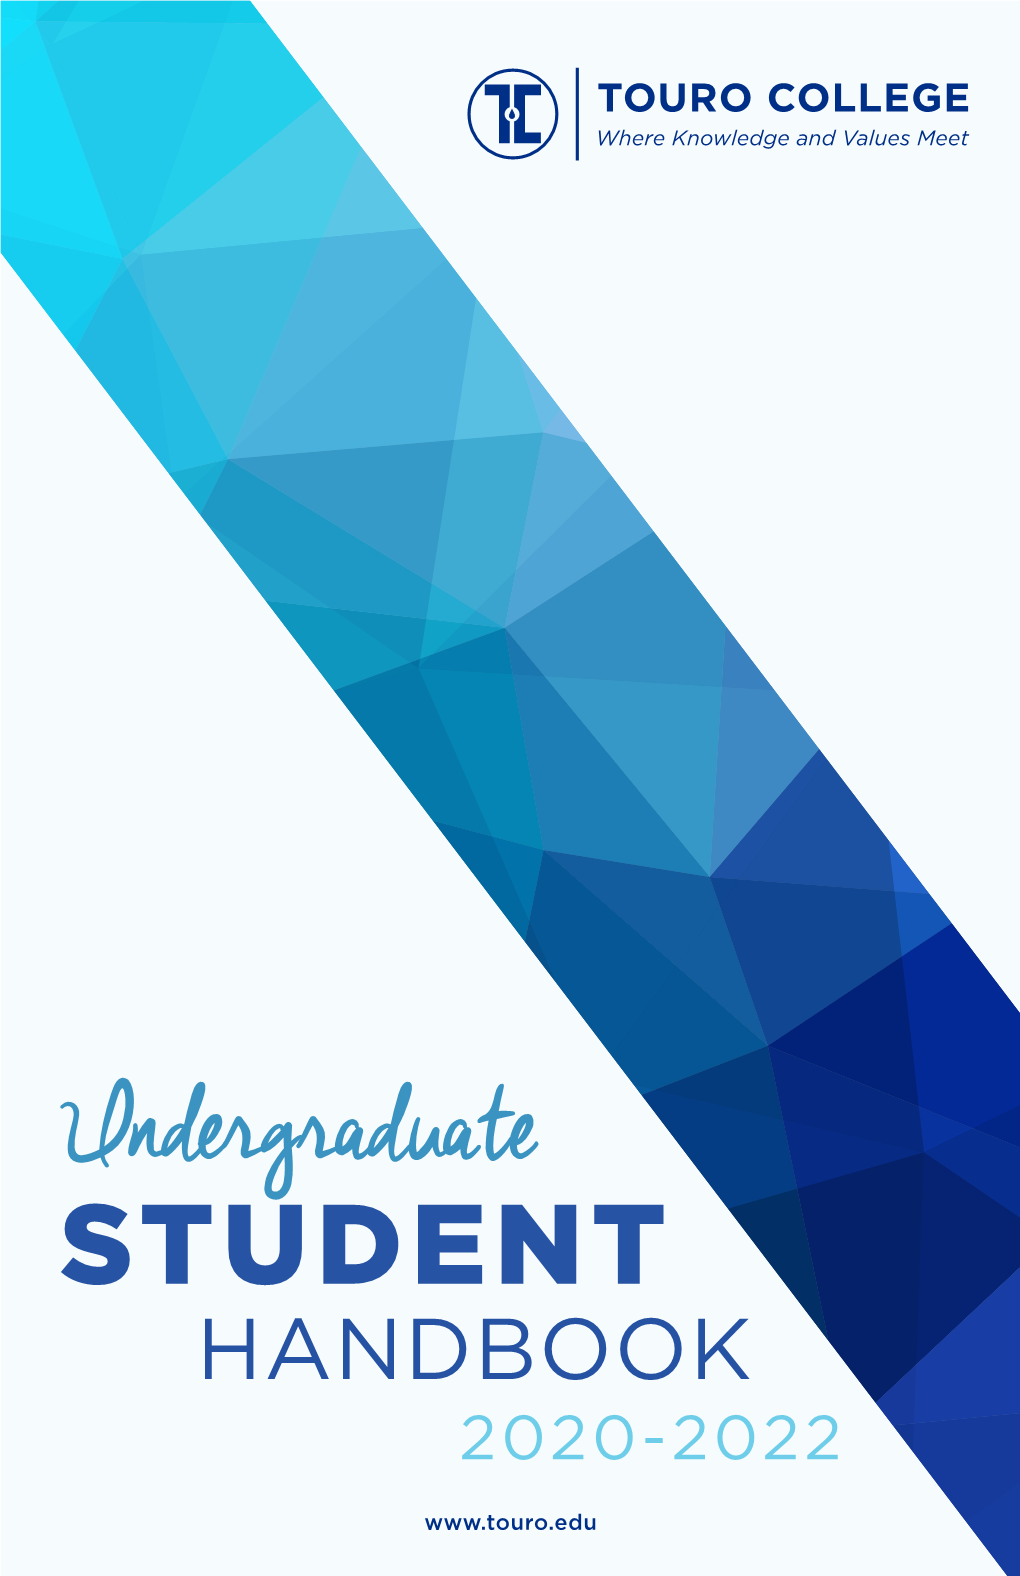 Undergraduate STUDENT HANDBOOK 2020-2022